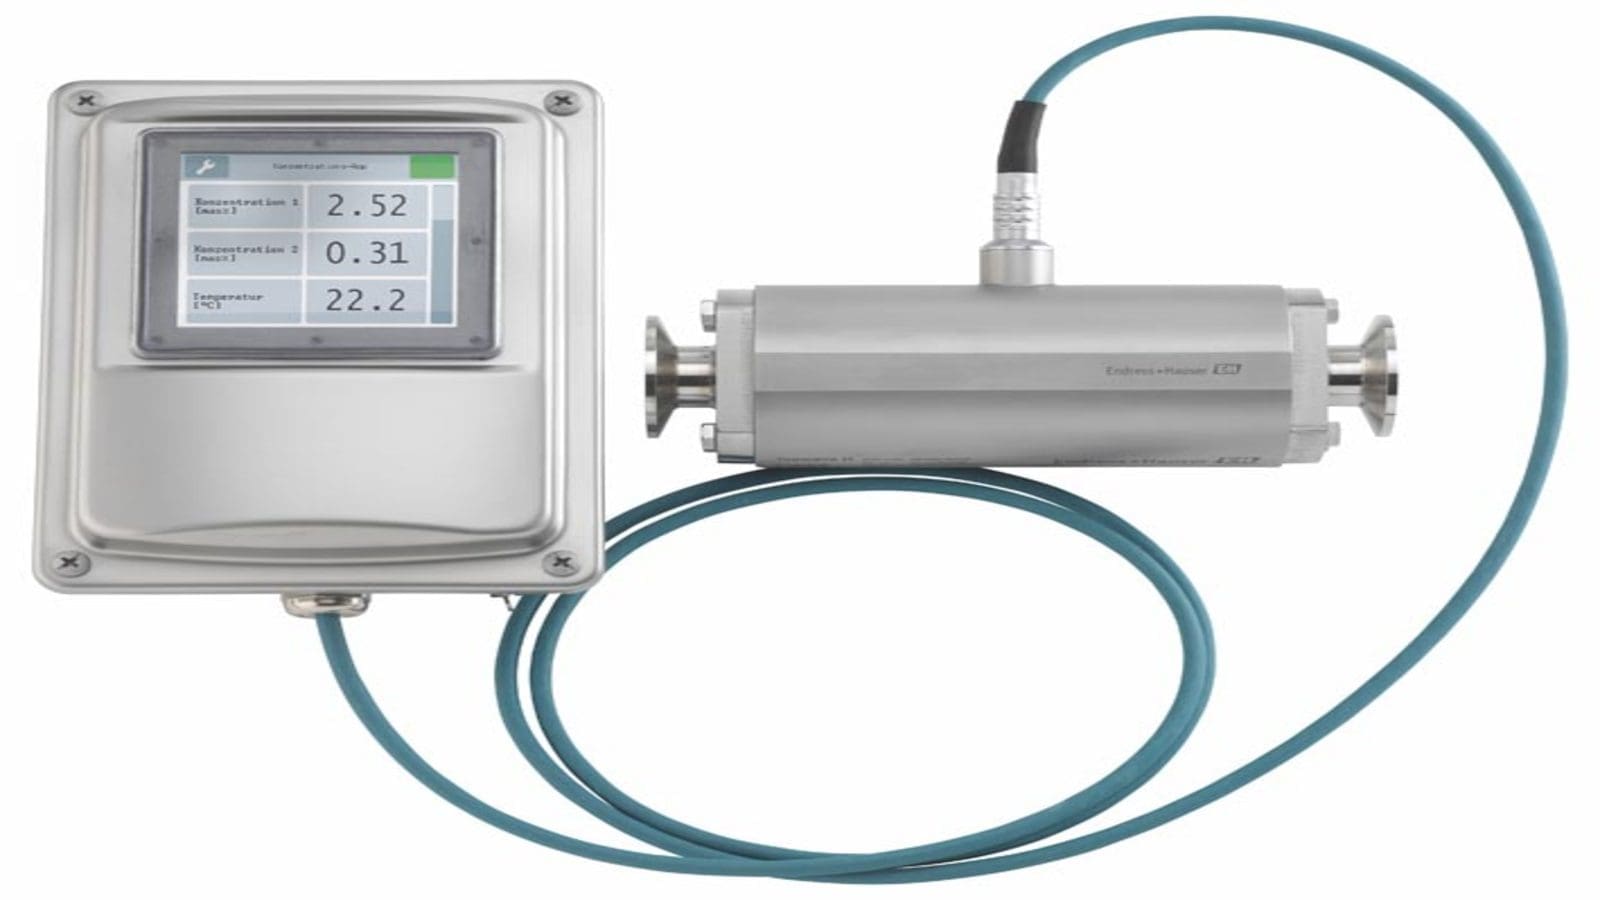 Endress+Hauser integrates measurement specialist SensAction AG, launches new flowmeter with enhanced reliability